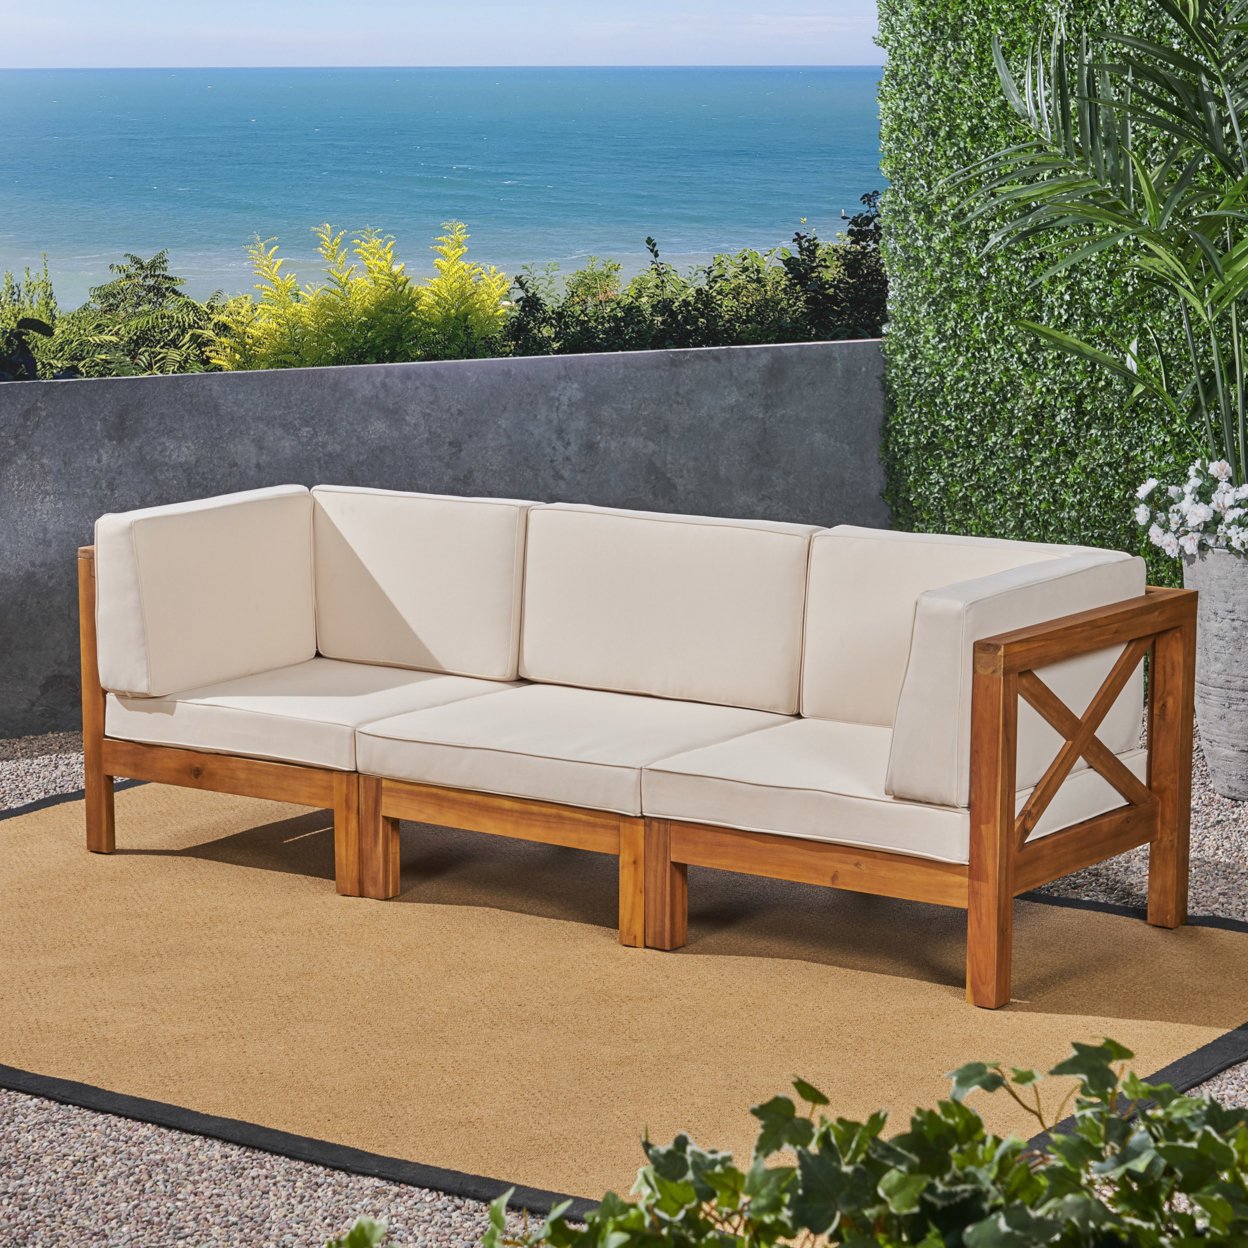 Brava Outdoor Modular Acacia Wood Sofa With Cushions - Teak Finish + Blue